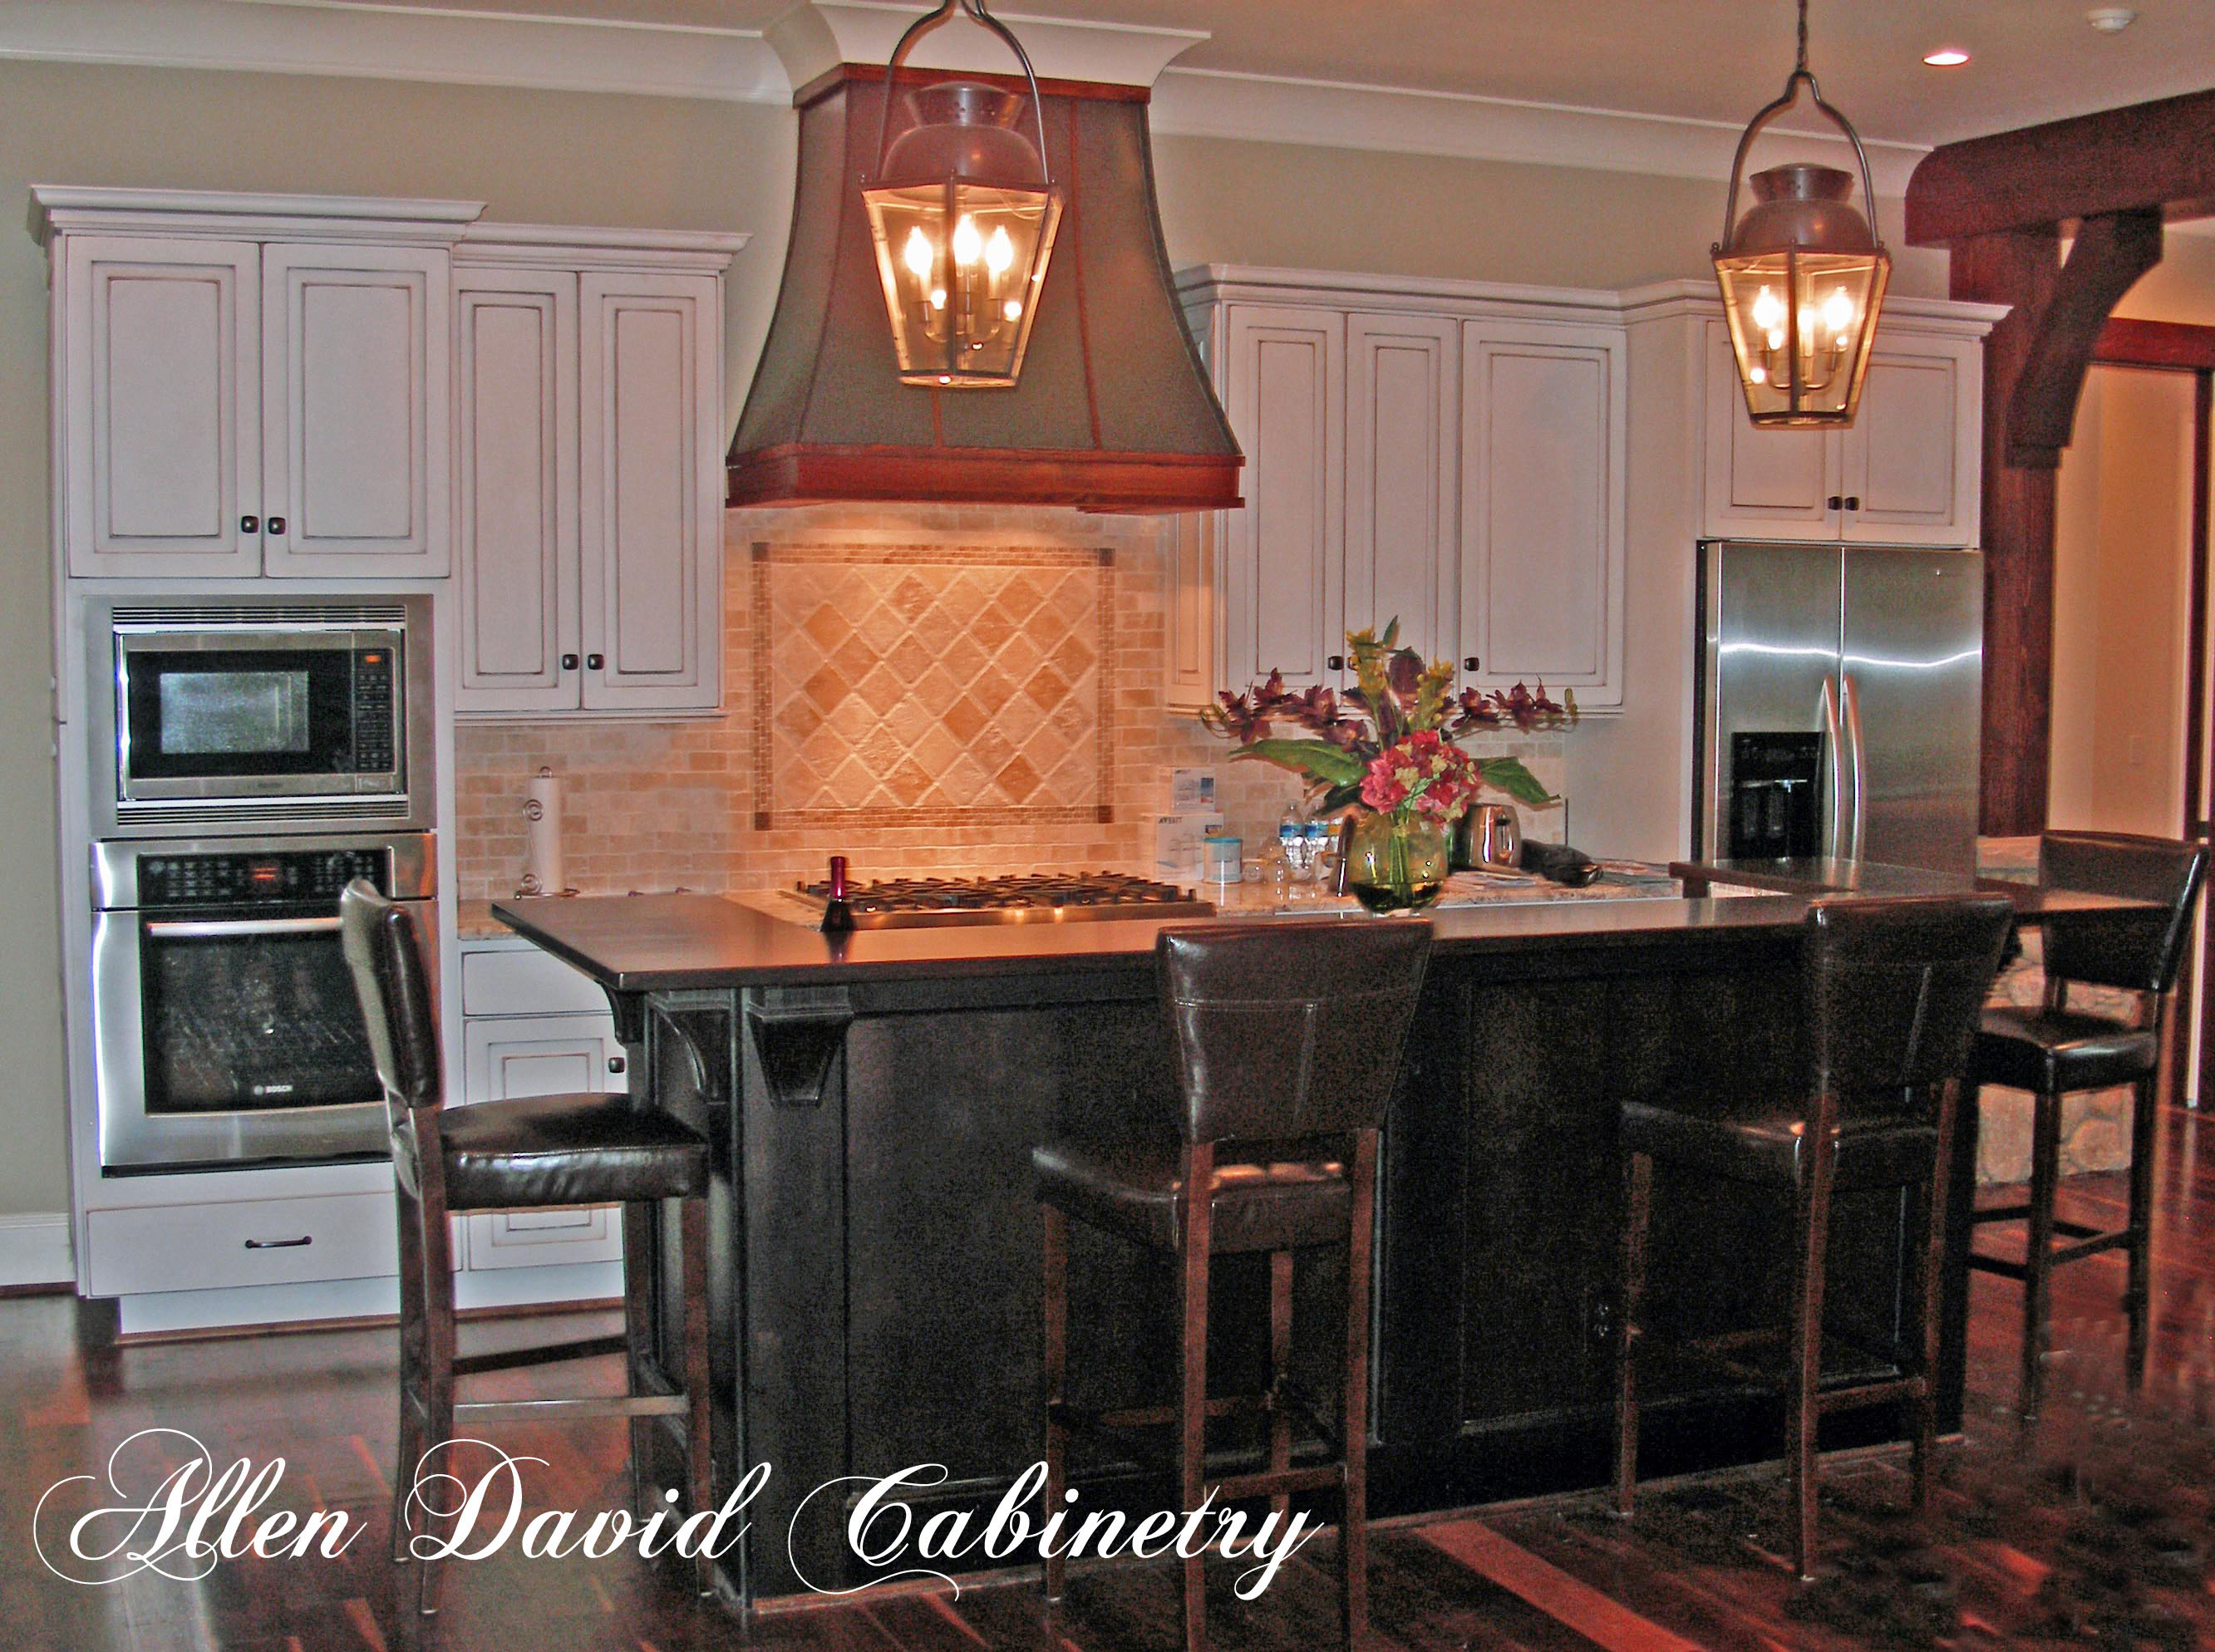 Cabinets and kitchen remodel-www.allen-david.com